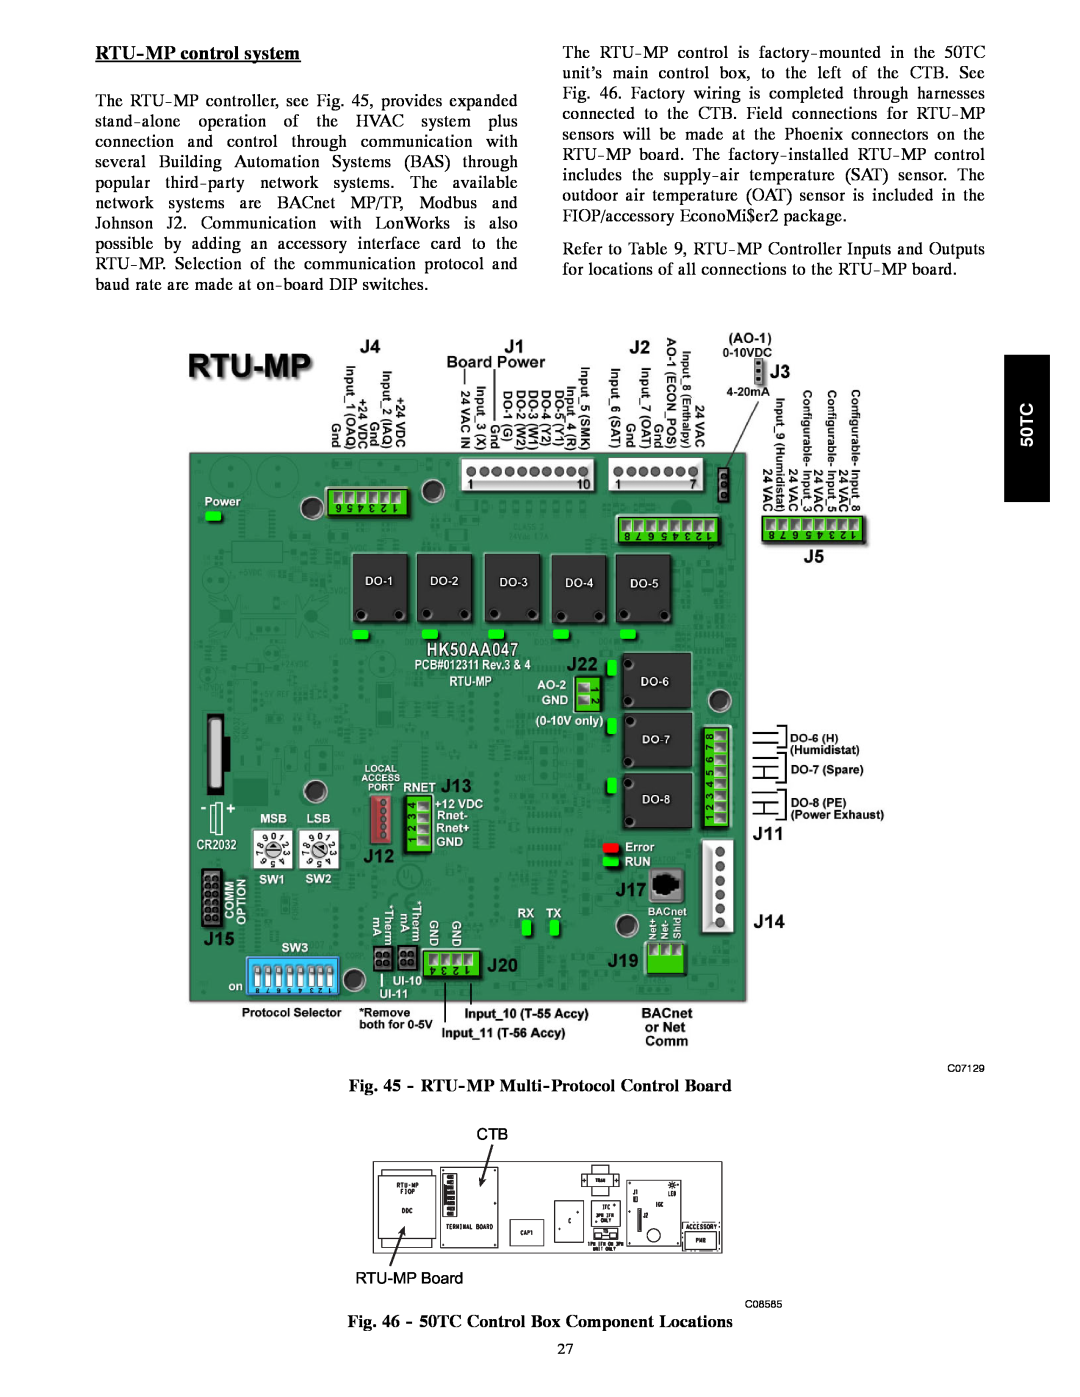 Carrier RTU-MPcontrol system, RTU-MP Multi-ProtocolControl Board, 50TC Control Box Component Locations 